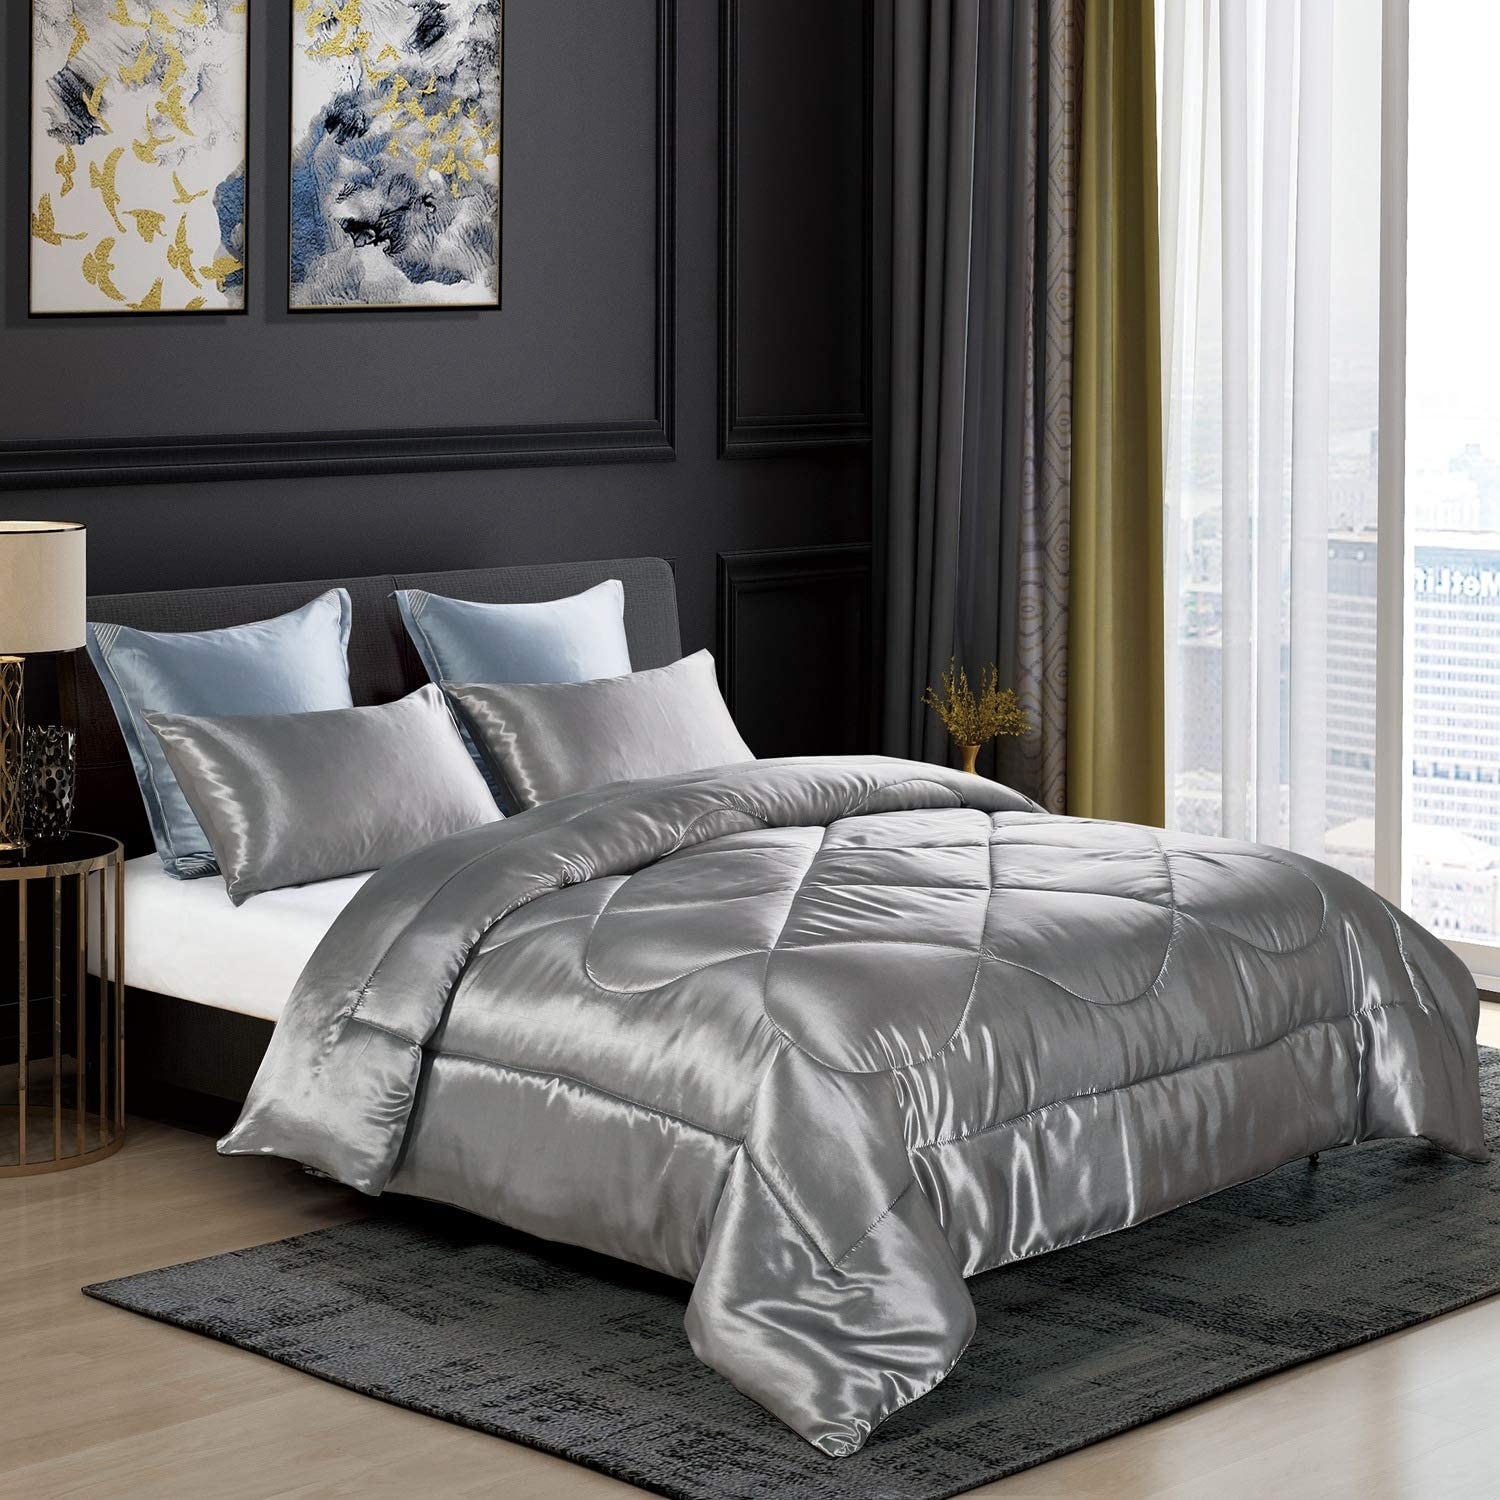 KINBEDY Luxury 3-Piece Satin/Sateen Silky Comforter Set Bedding